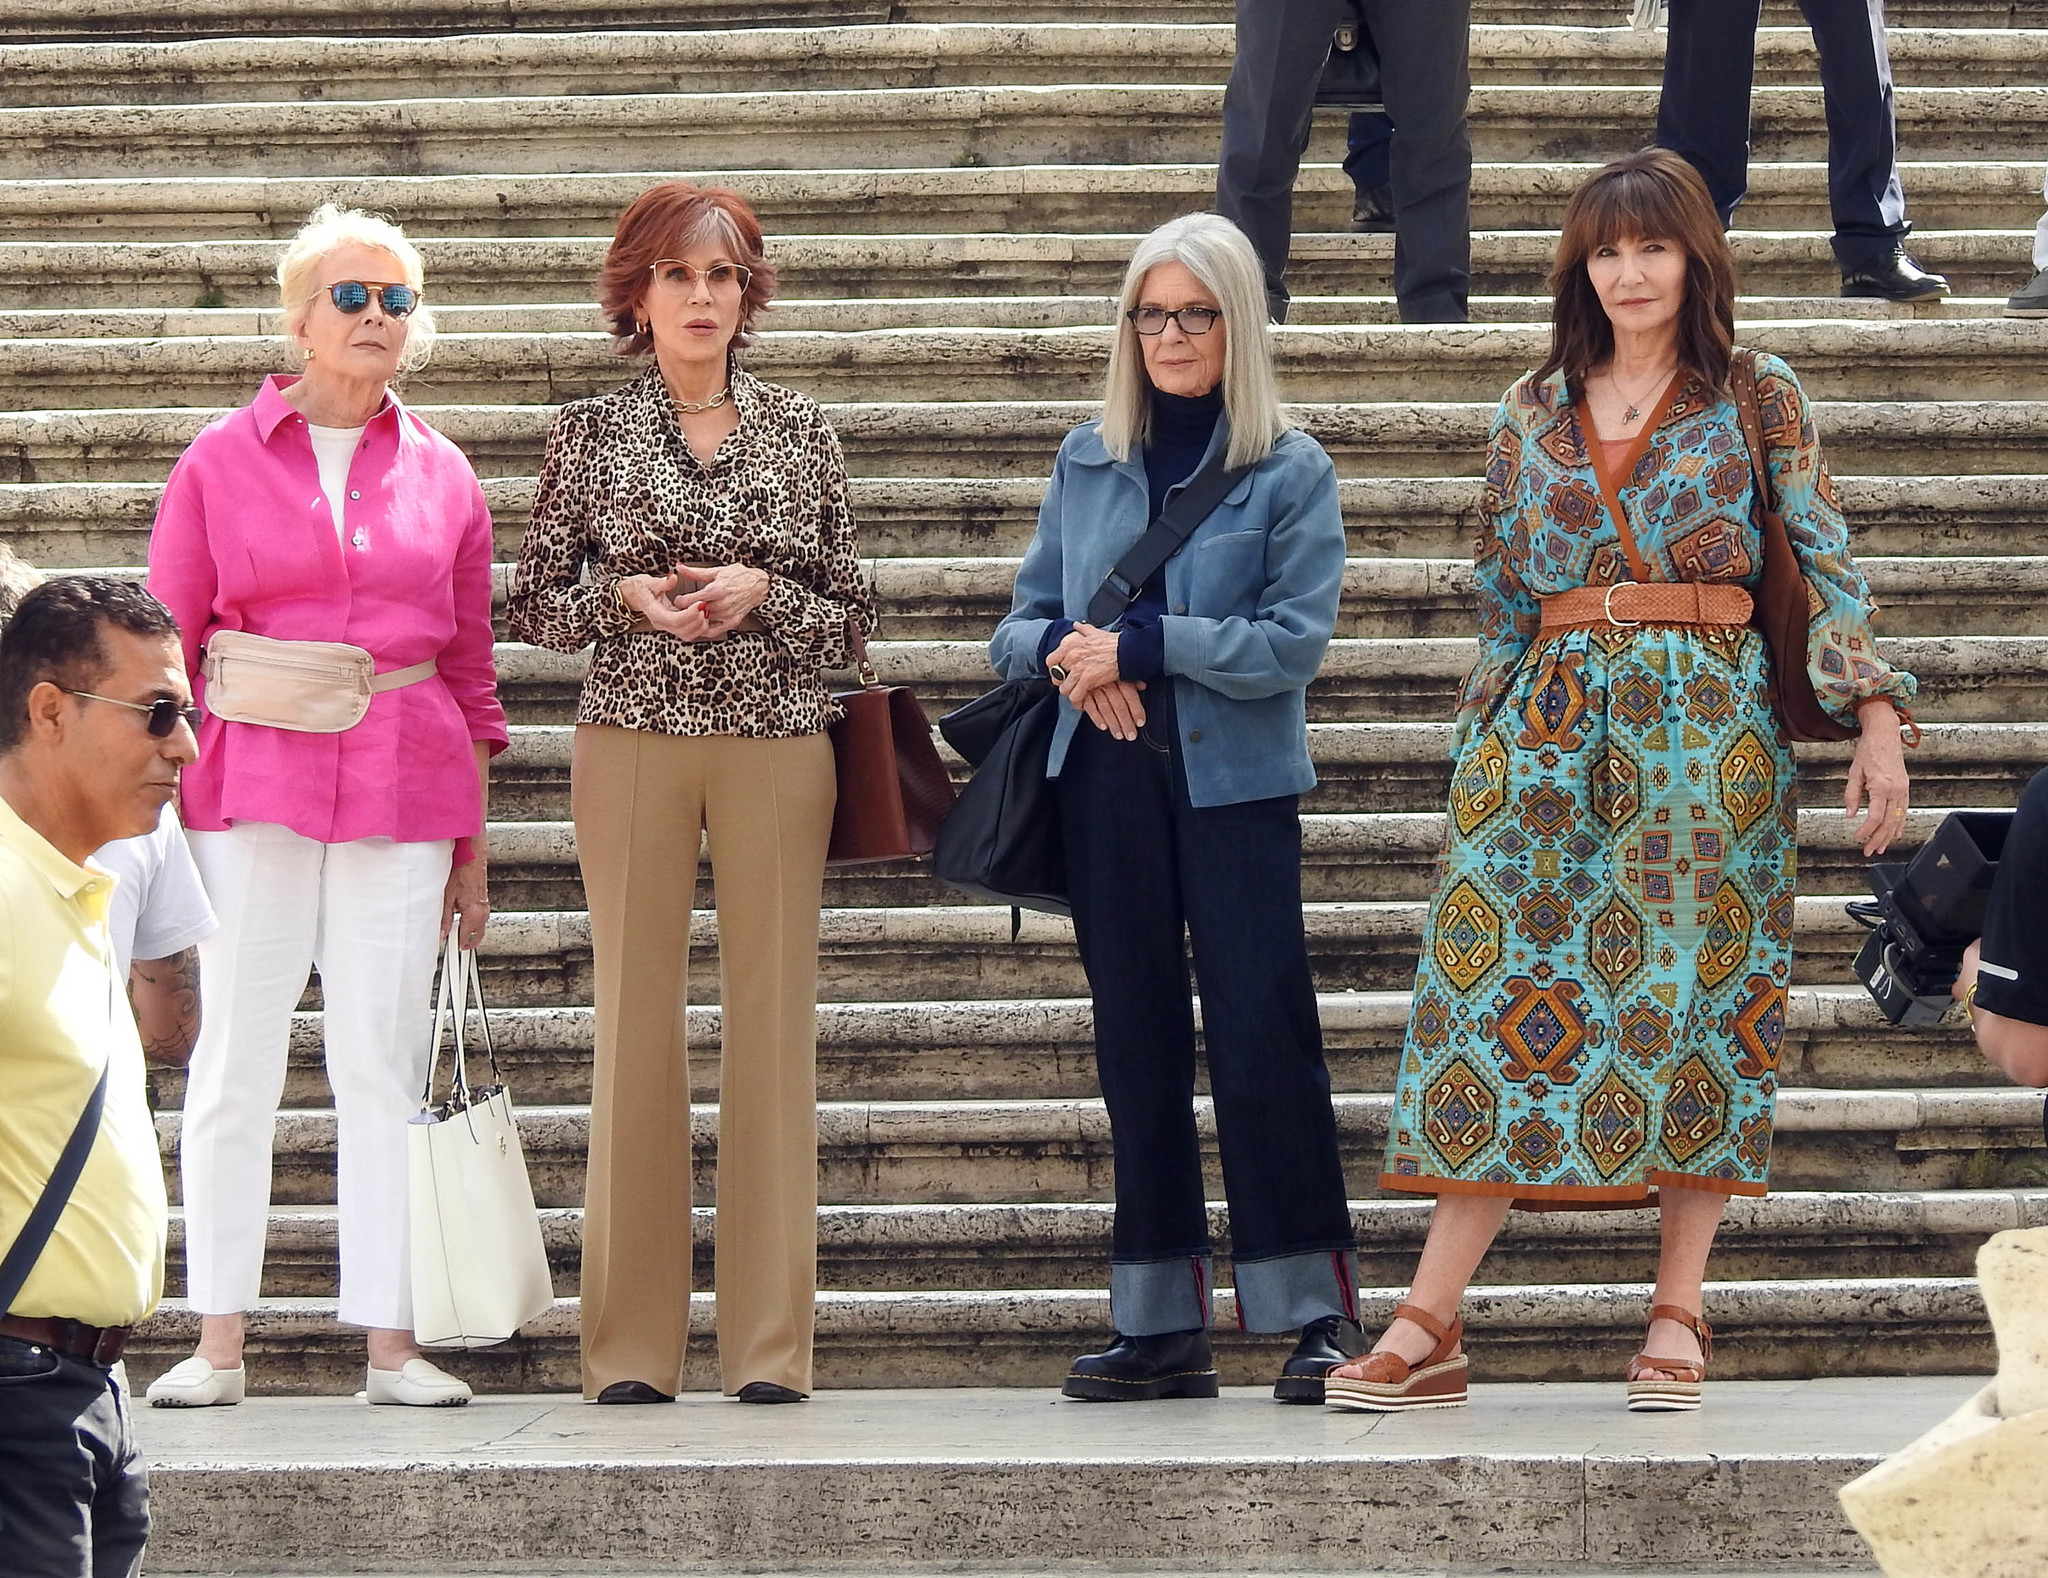 Candice Bergen, Jane Fonda, Diane Keaton y Mary Steenburgen grabando "Book Club 2" en Roma.